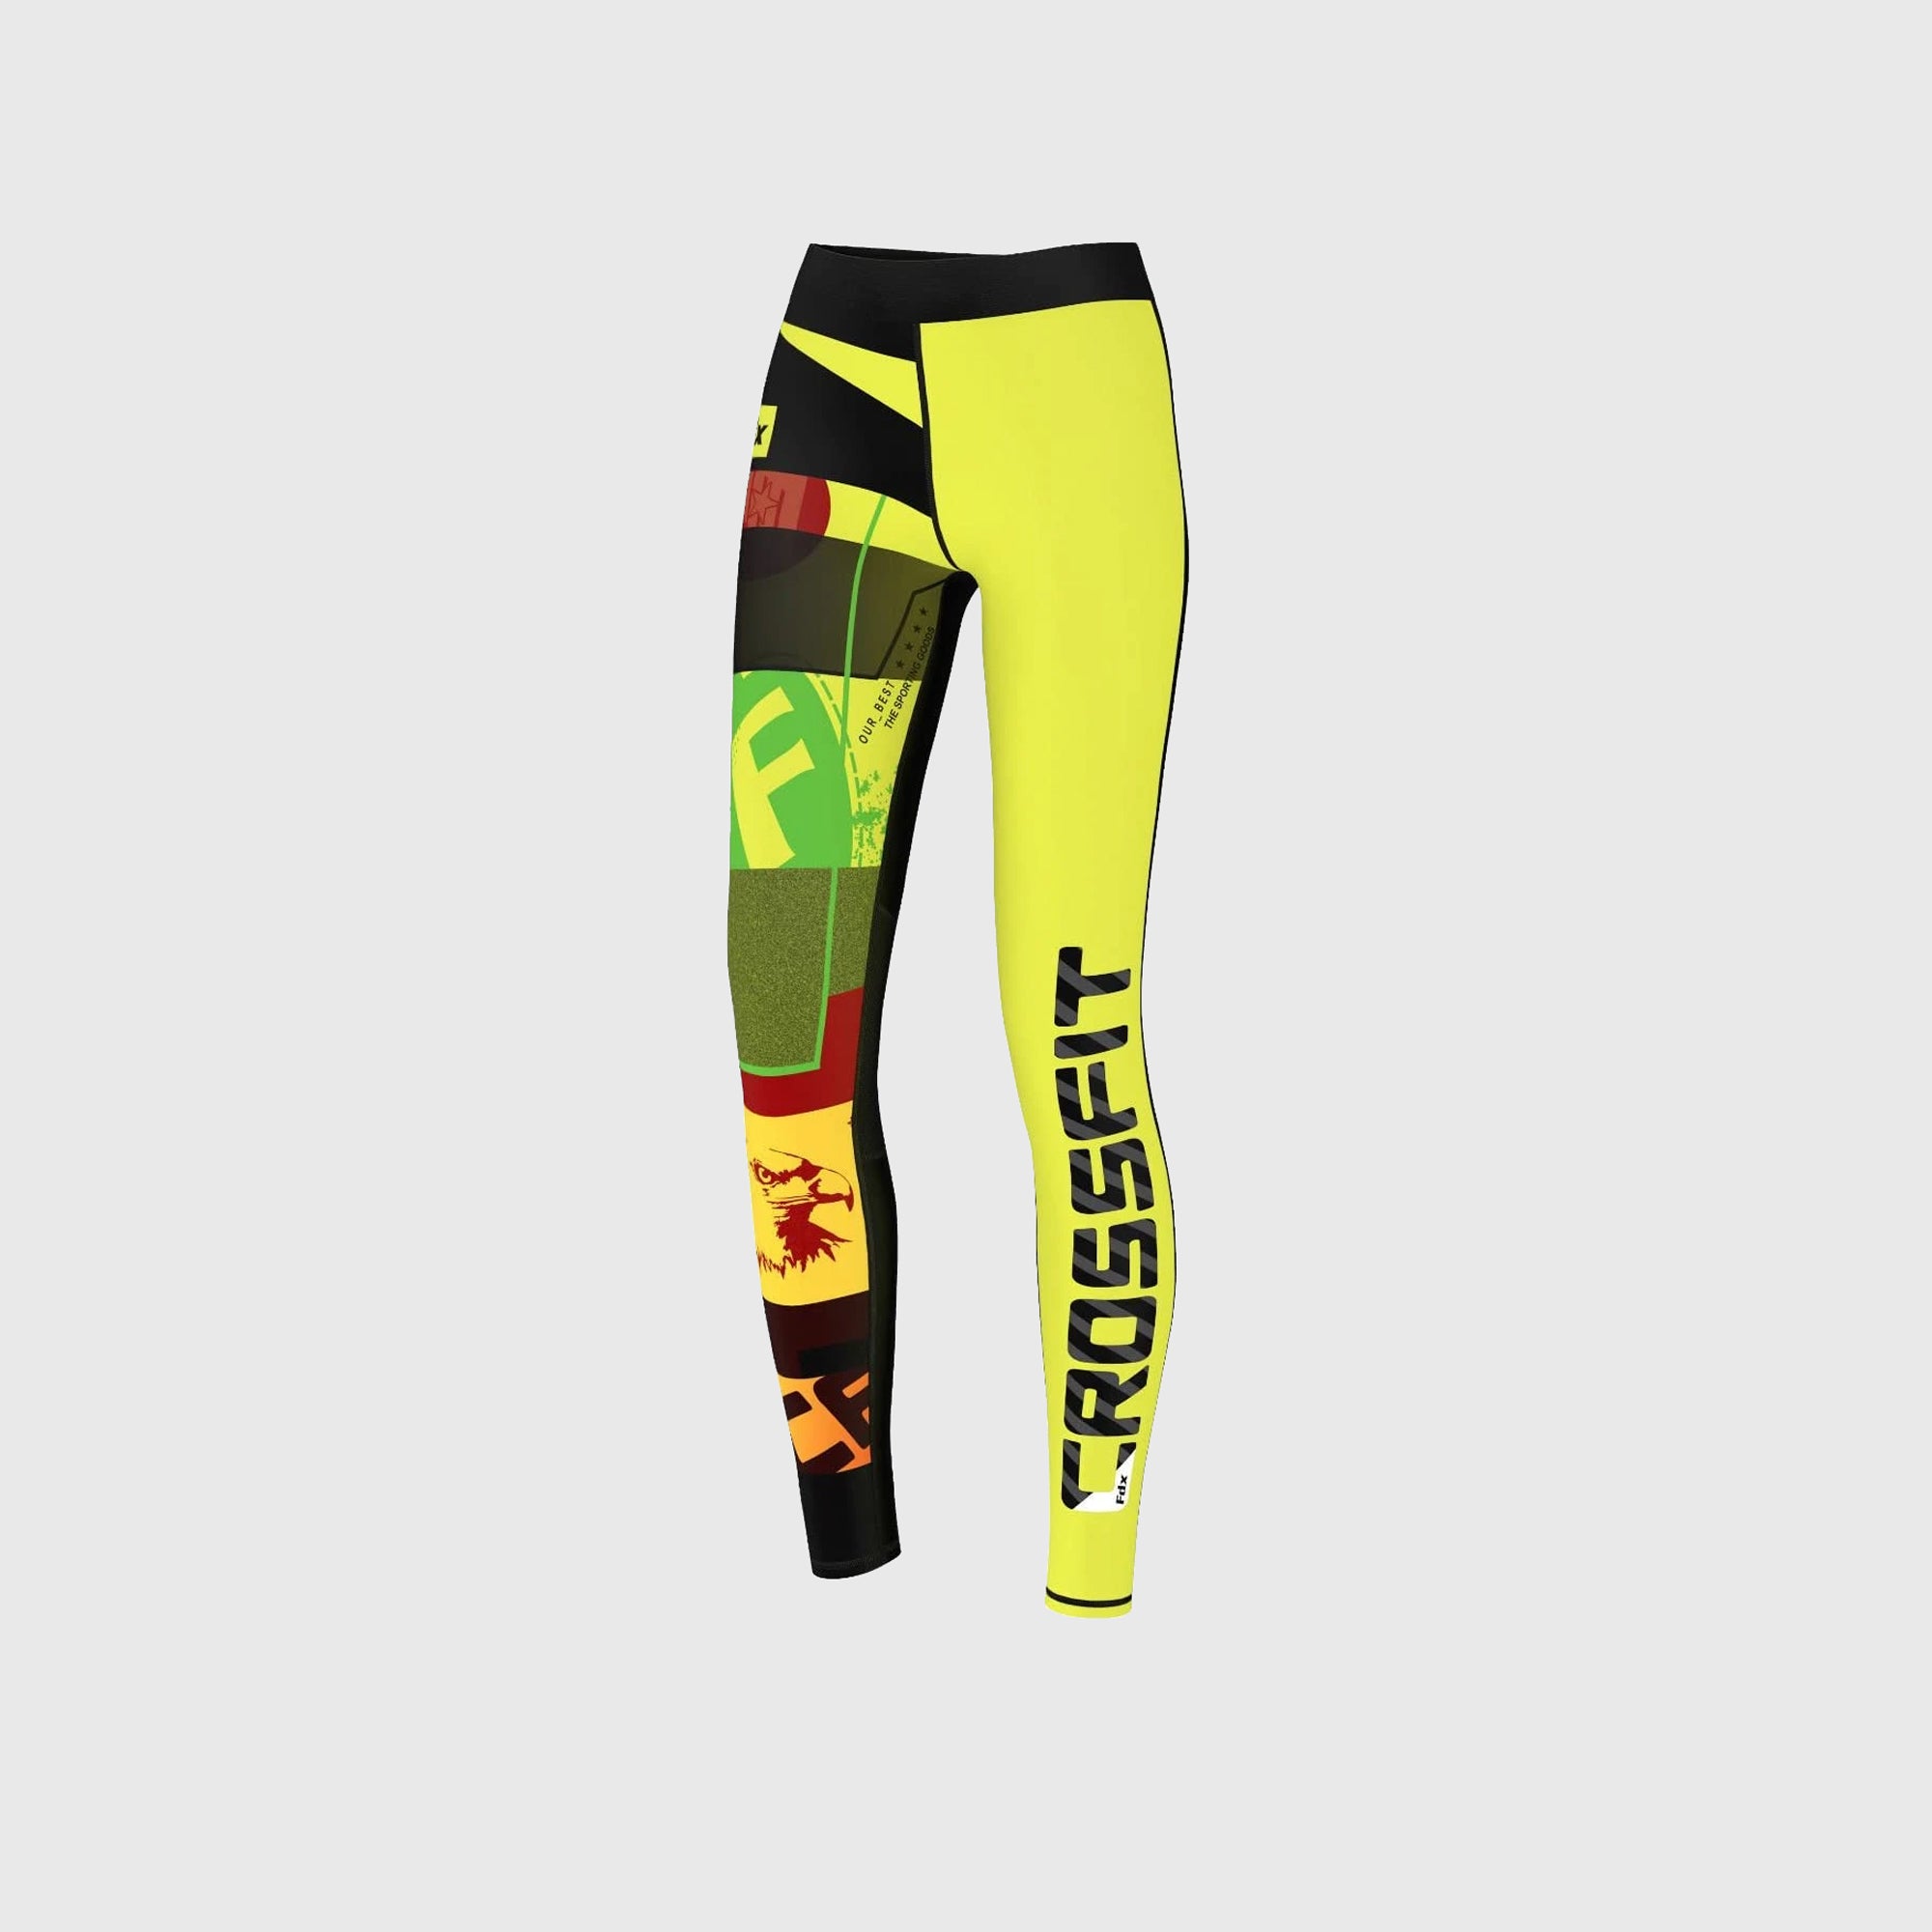 Fdx Black & Yellow Compression Tights Leggings Gym Workout Running Athletic Yoga Elastic Waistband Stretchable Breathable Training Jogging Pants - Amrap